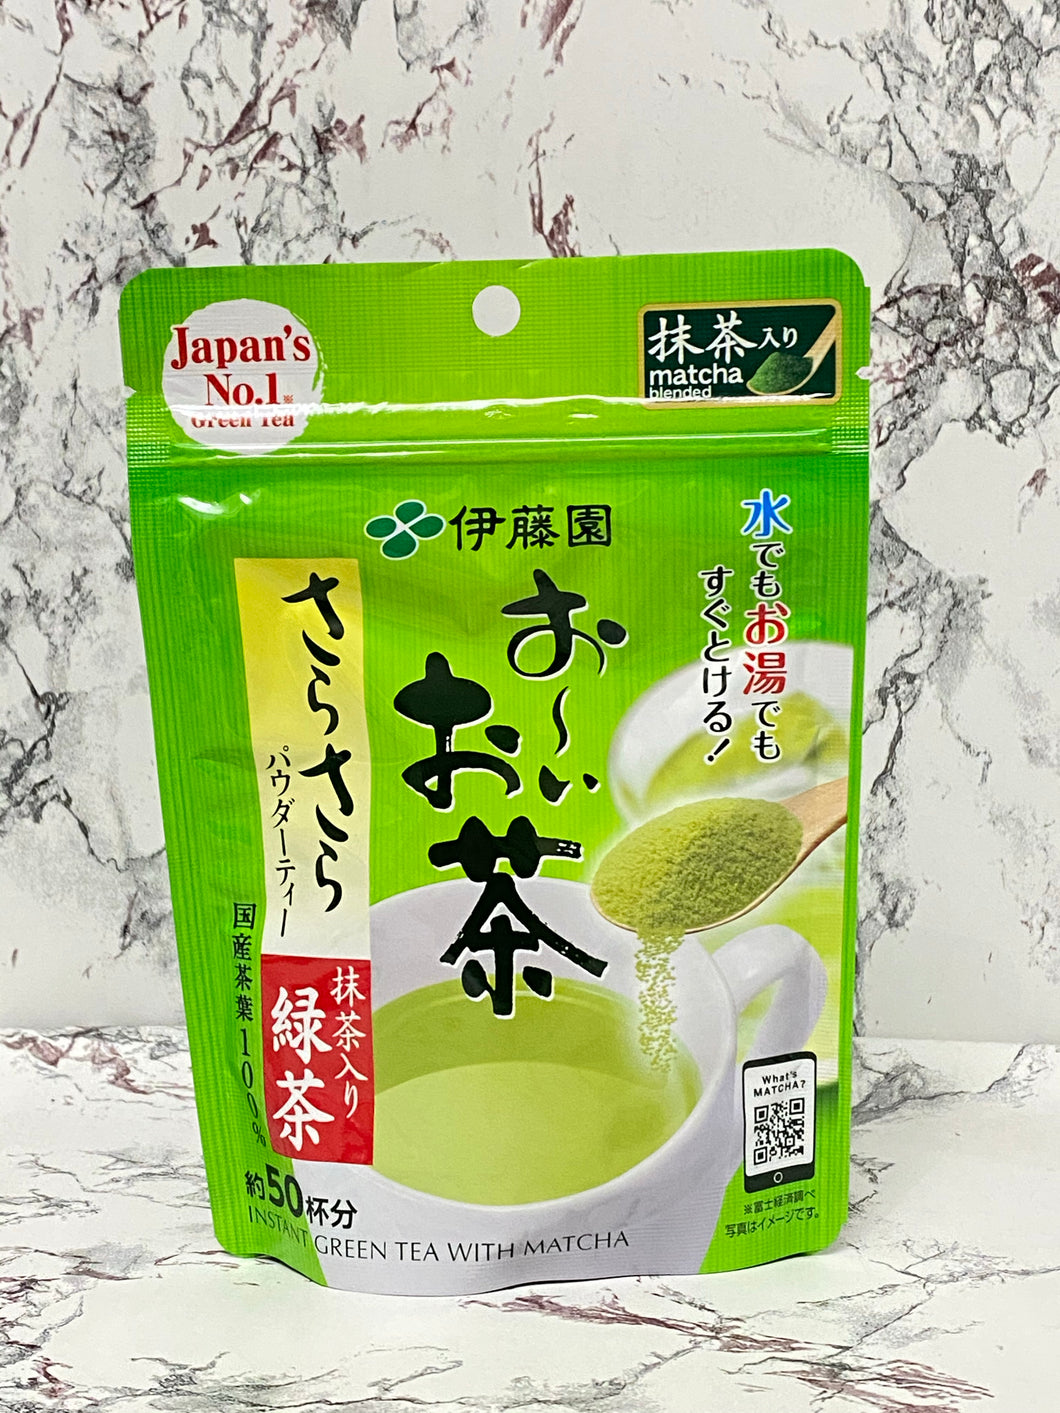 Itoen Instant green tea with matcha